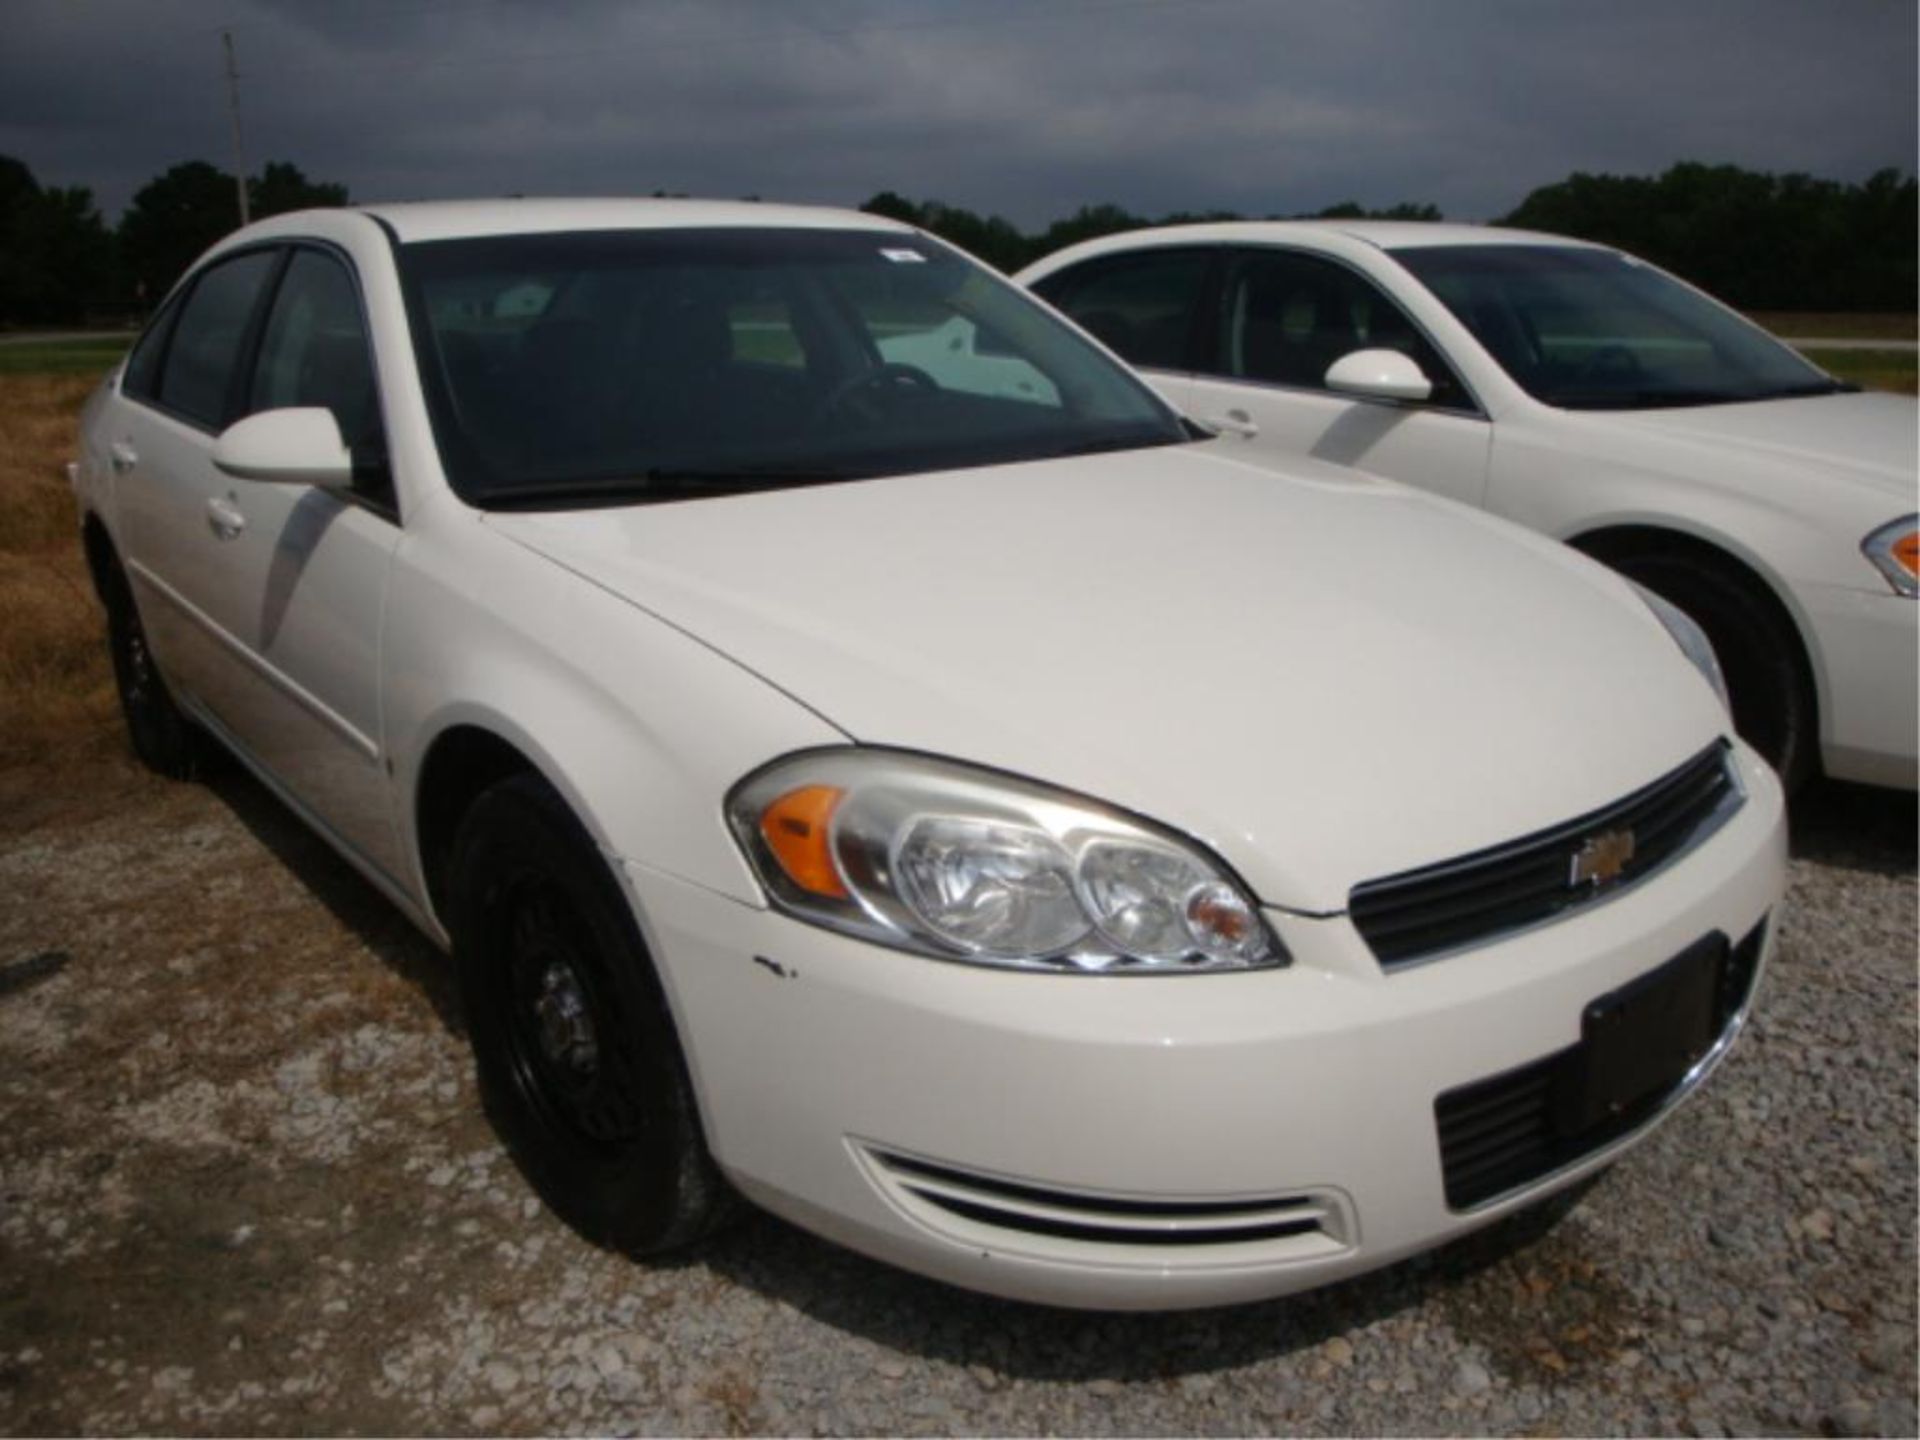 (Title) 2007 Chevrolet Impala 4 door, 3900 V6,73,036 mi. vin 2G1WS55R979417943 - Image 5 of 10